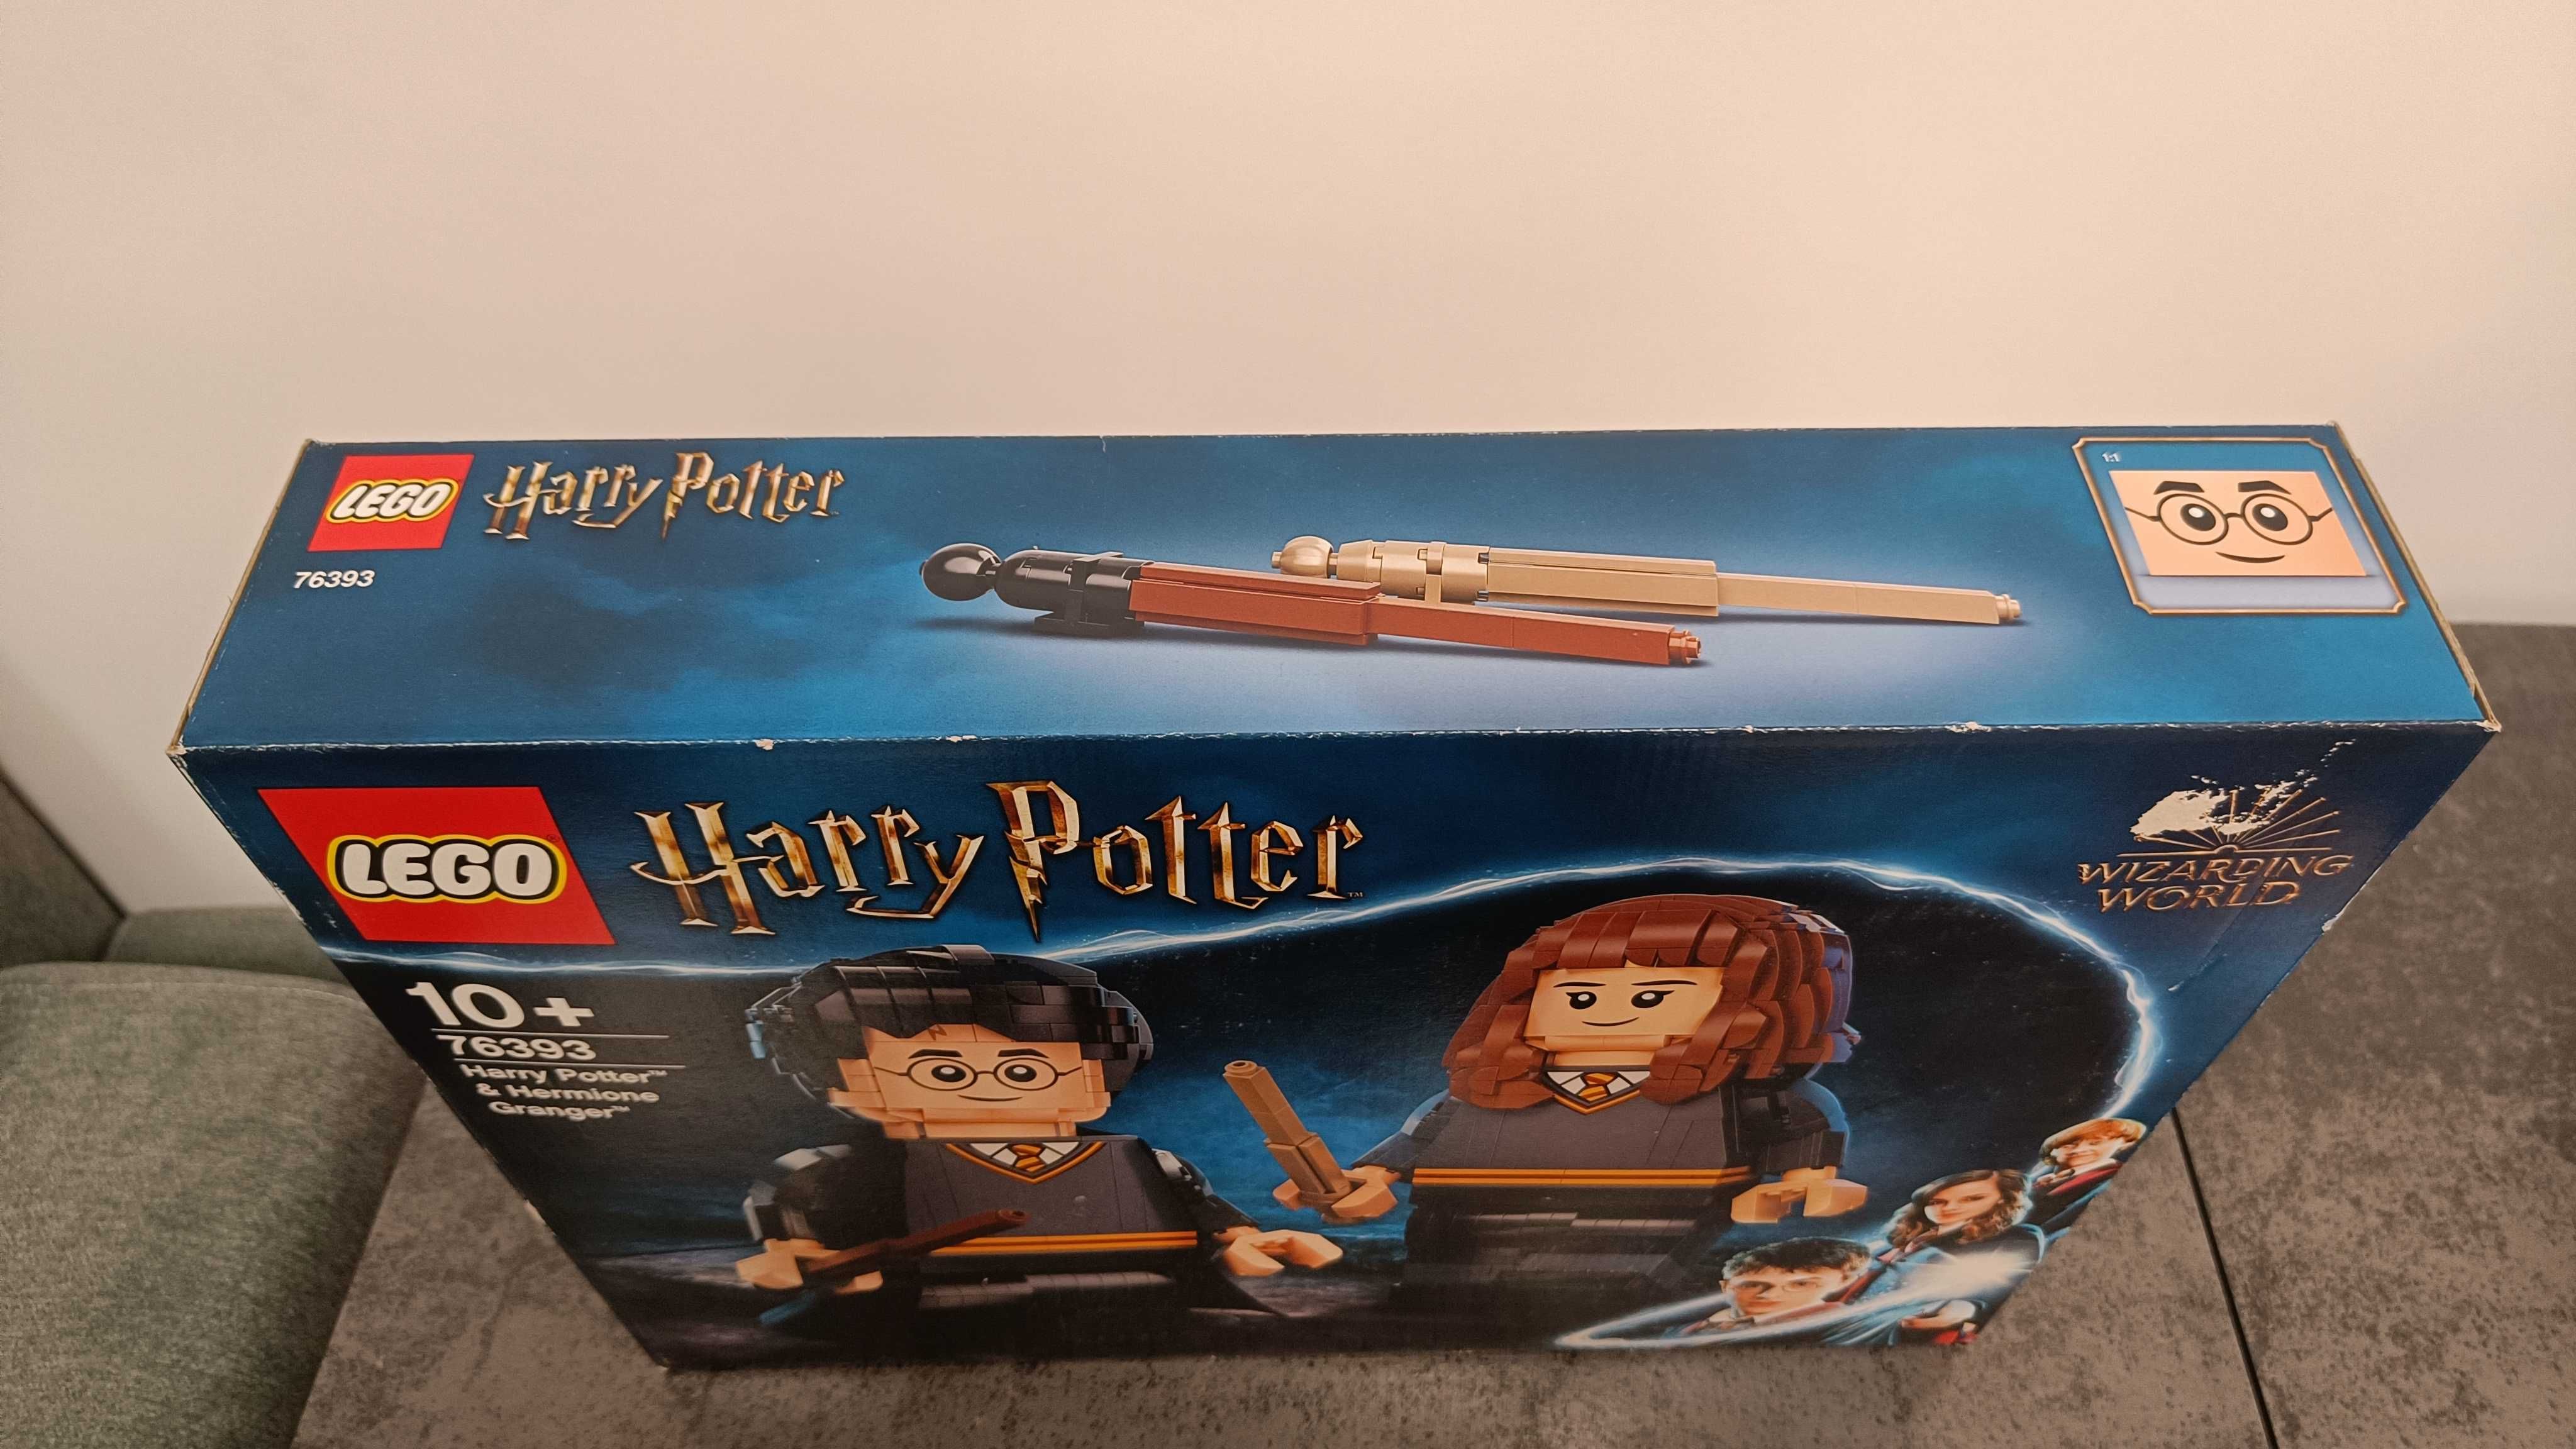 LEGO 76393 Harry Potter - Harry Potter & Hermione Granger